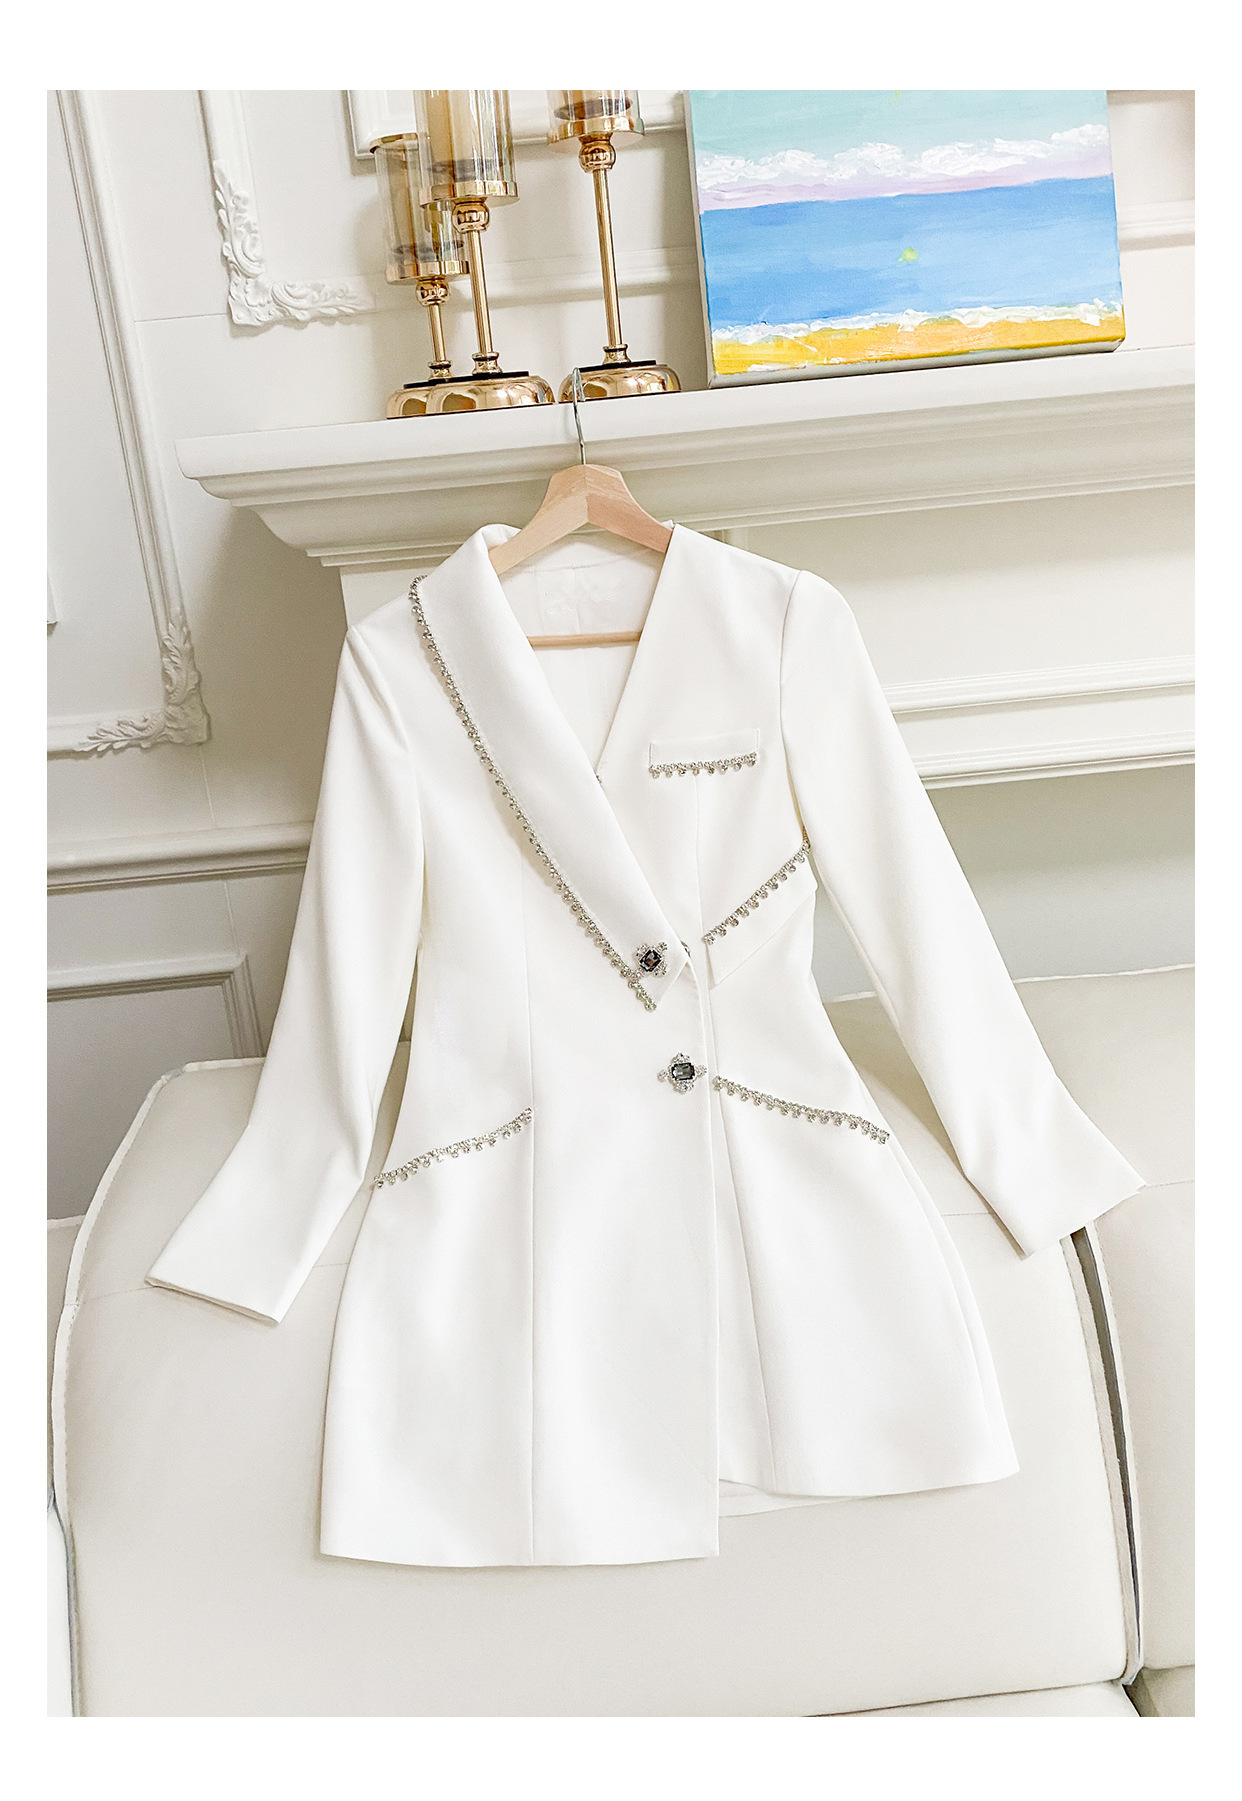 Heavy Industry Diamond-encrusted Suit Dress High-grade Temperament Goddess Fan White Suit Jacket Female Autumn Wear